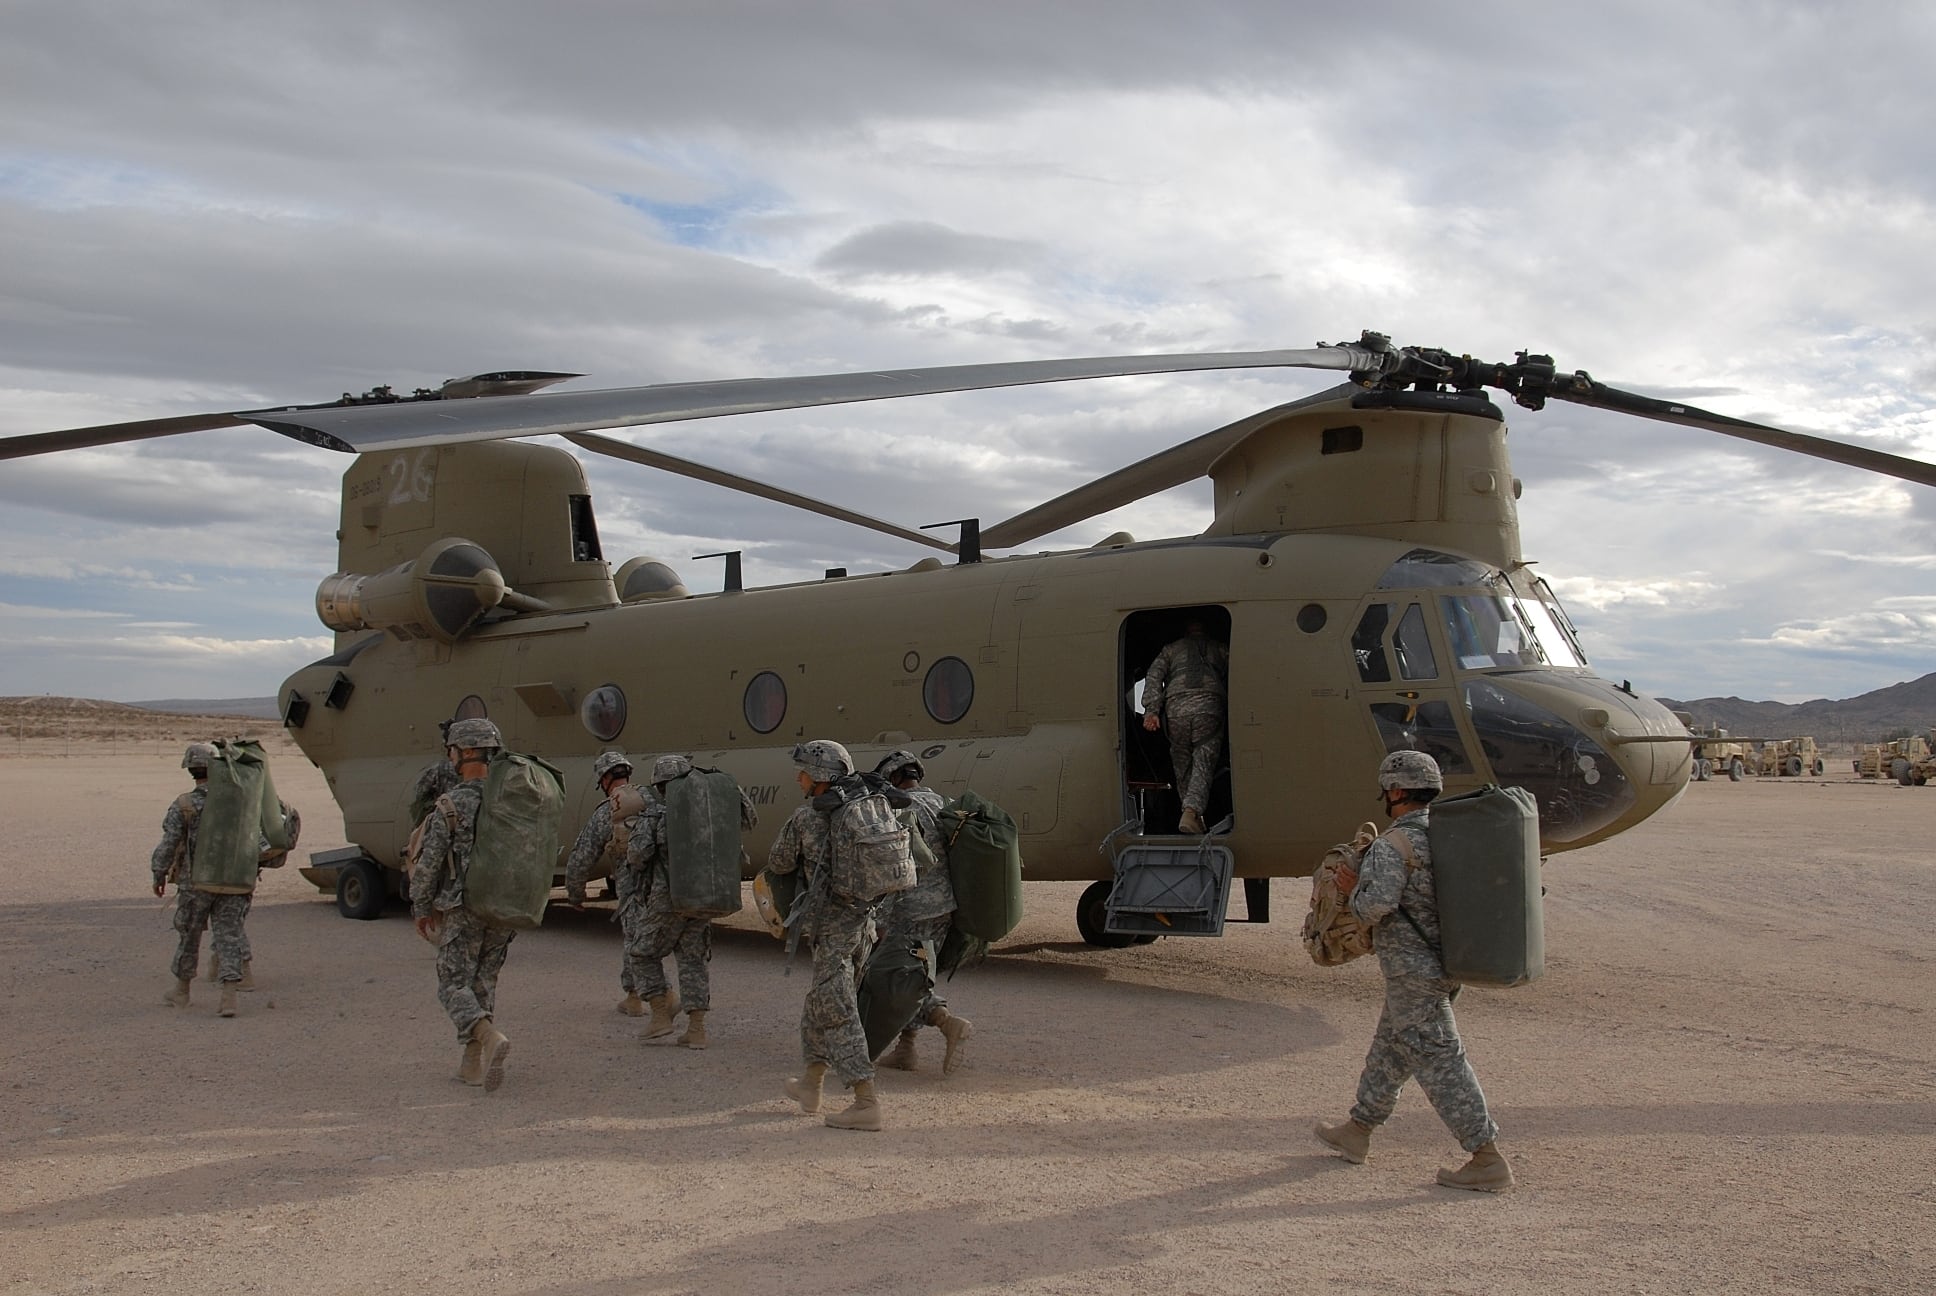 CH-47 Chinook (Wikipedia)